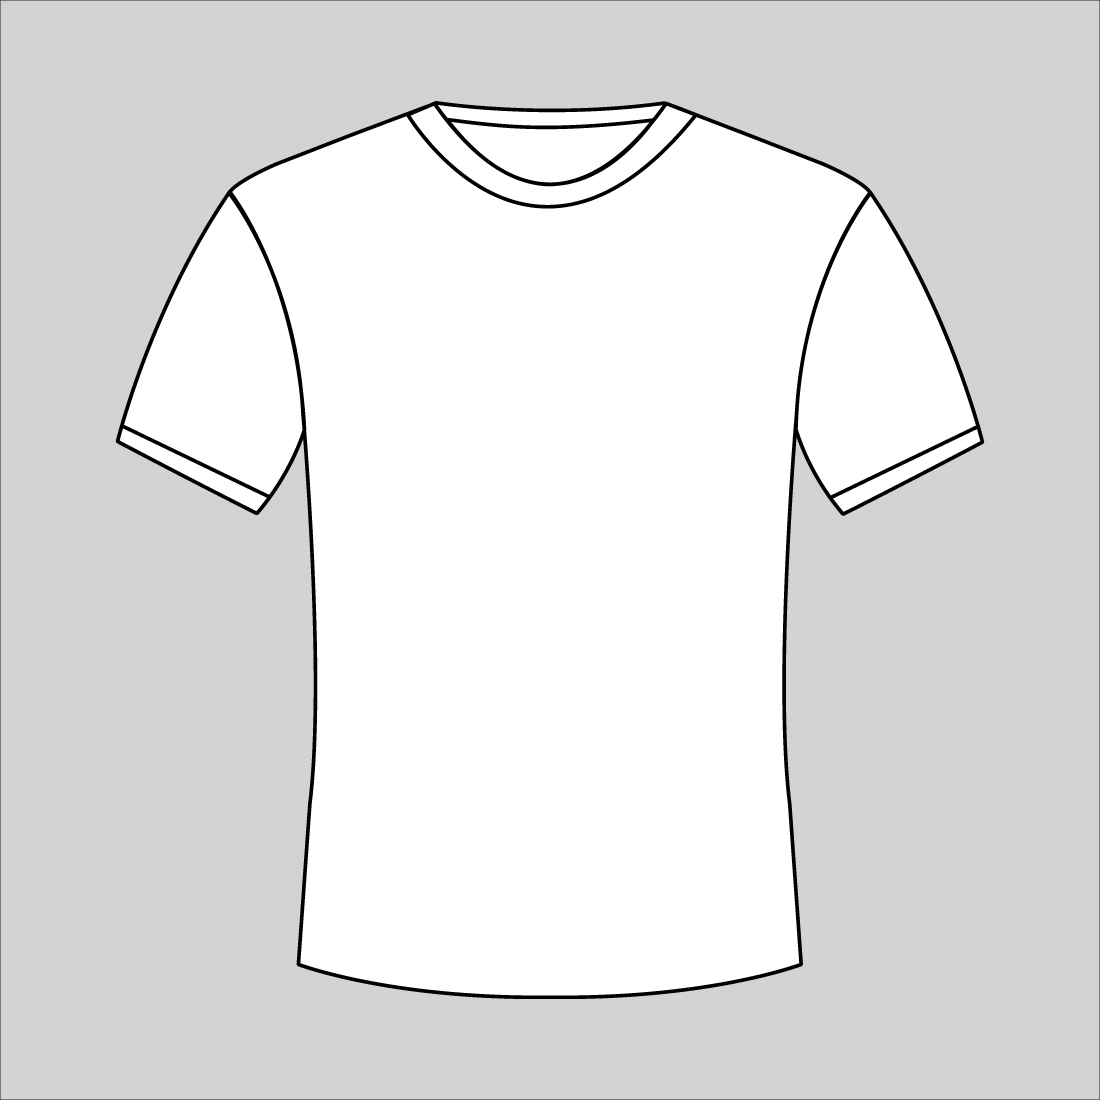 T Shirt Outline Template museosdelima com